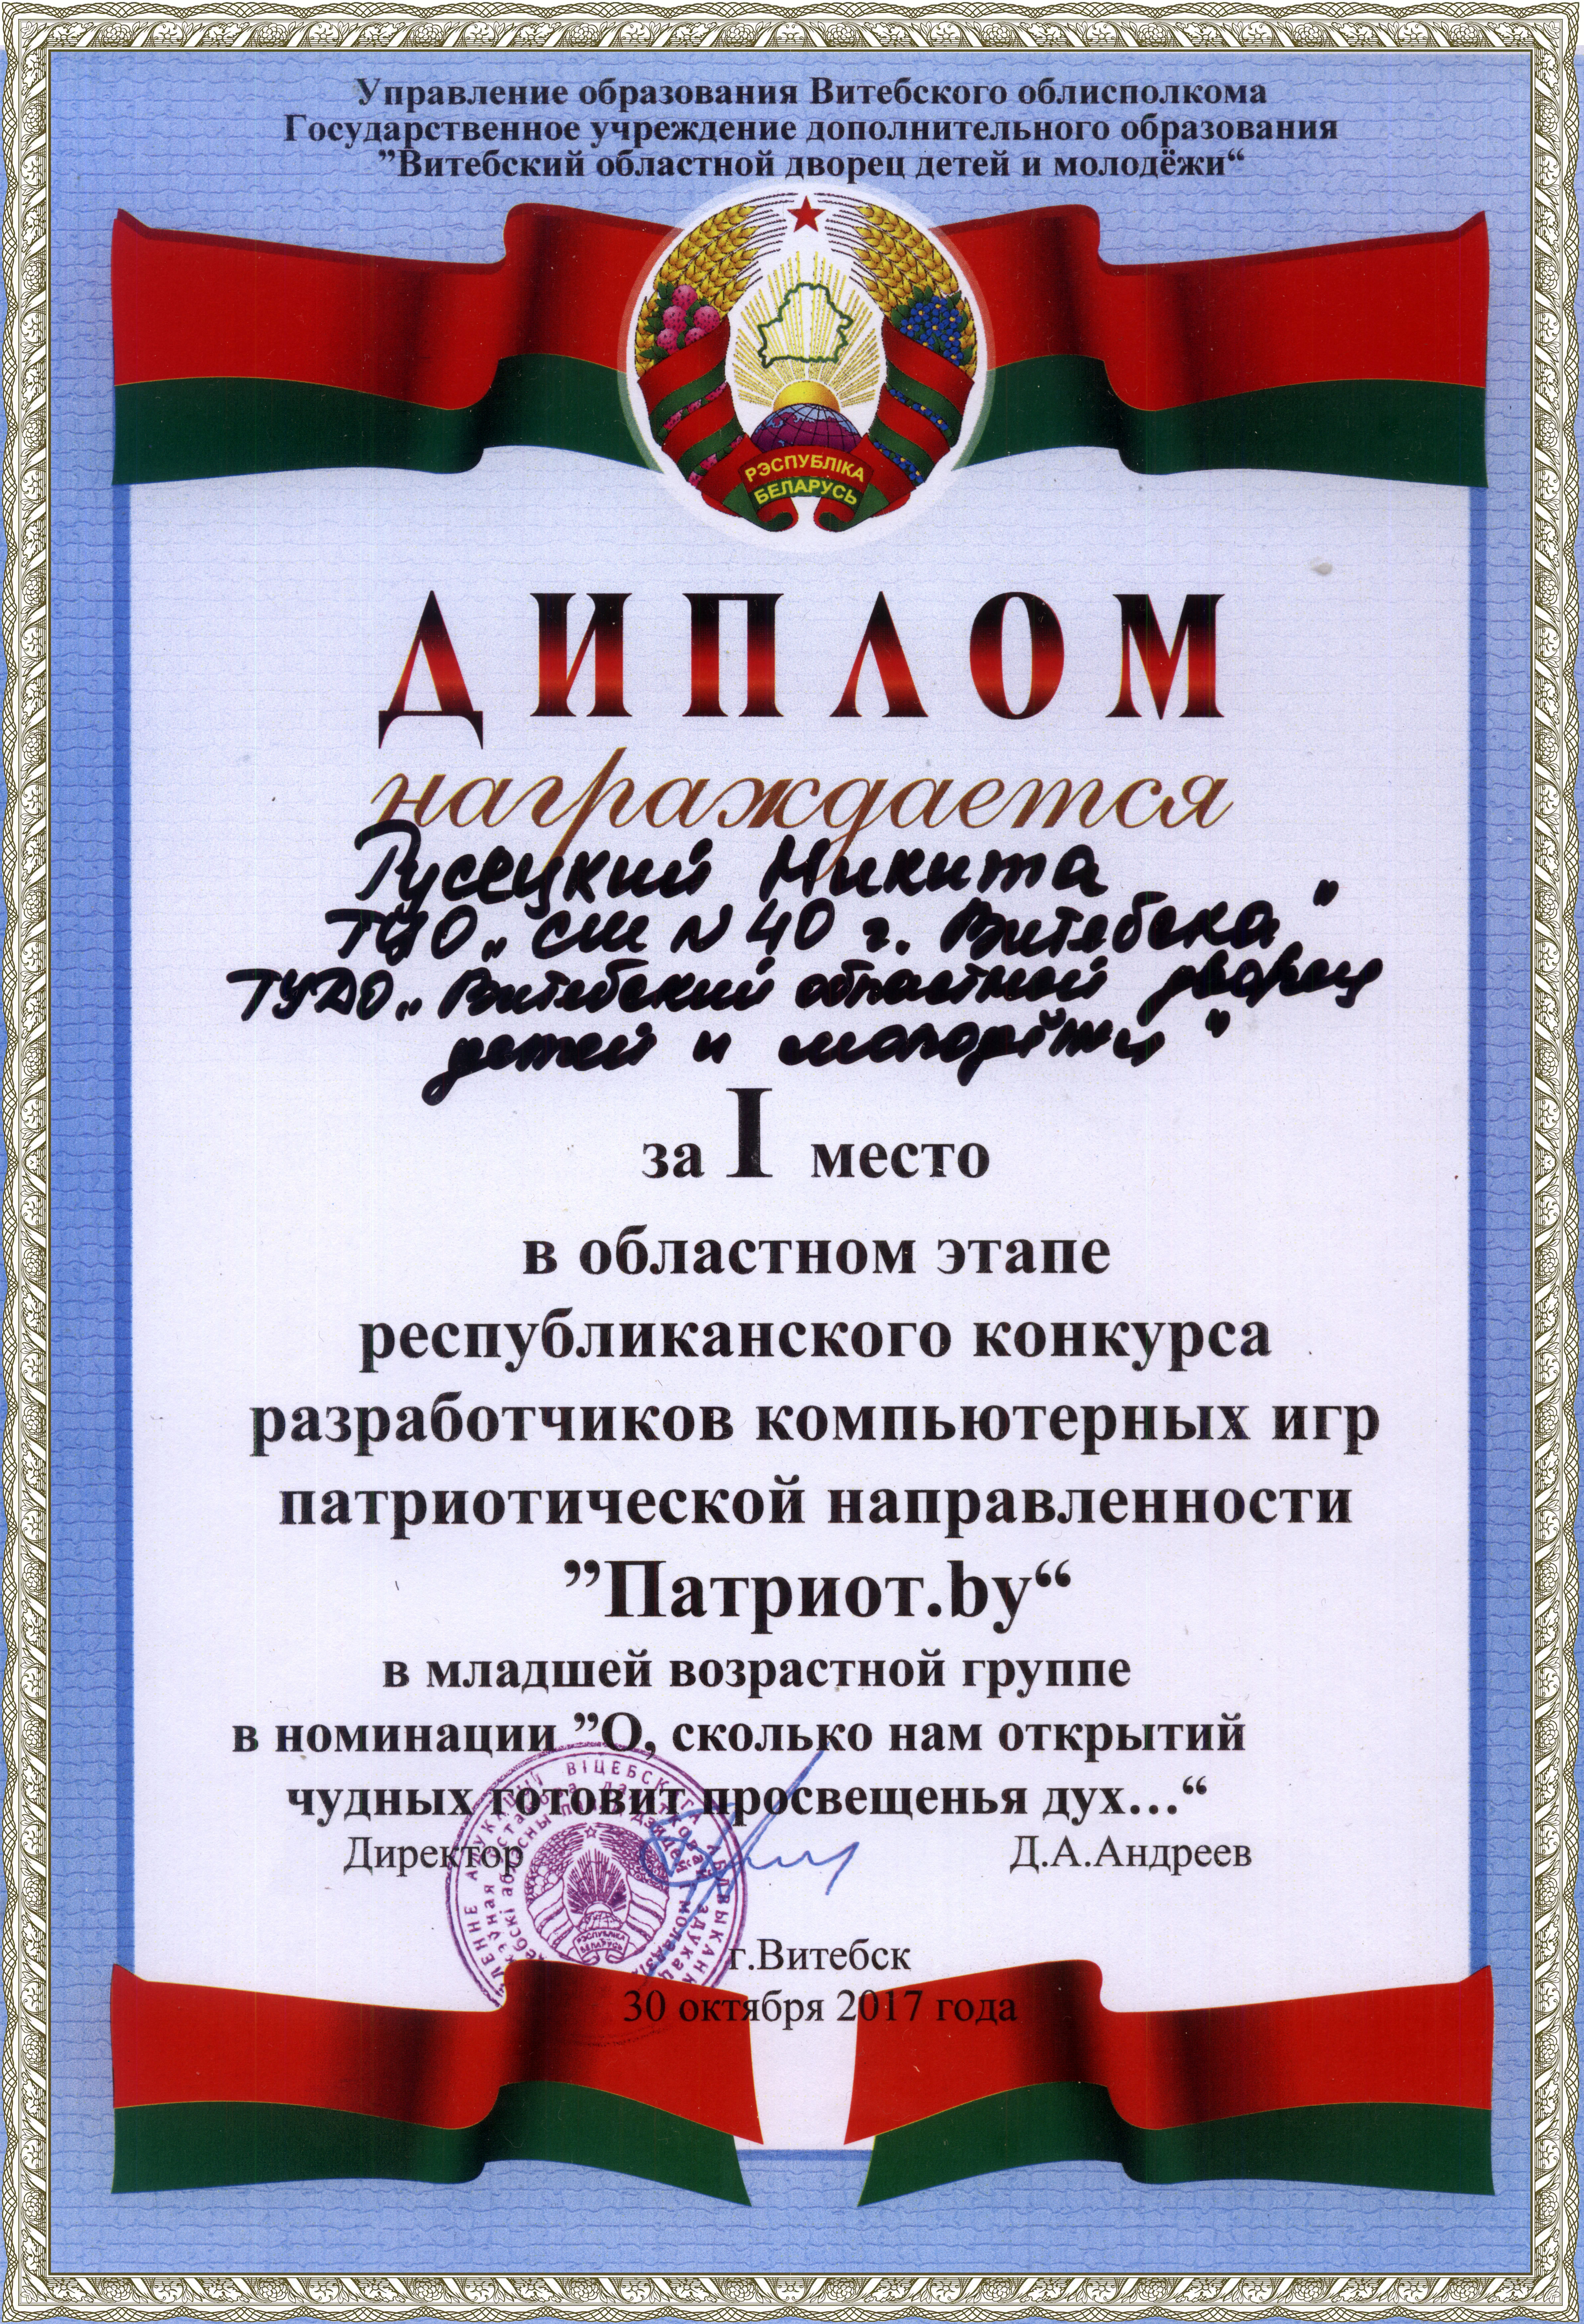 Diplom Rusetsky Patriotobl 2017